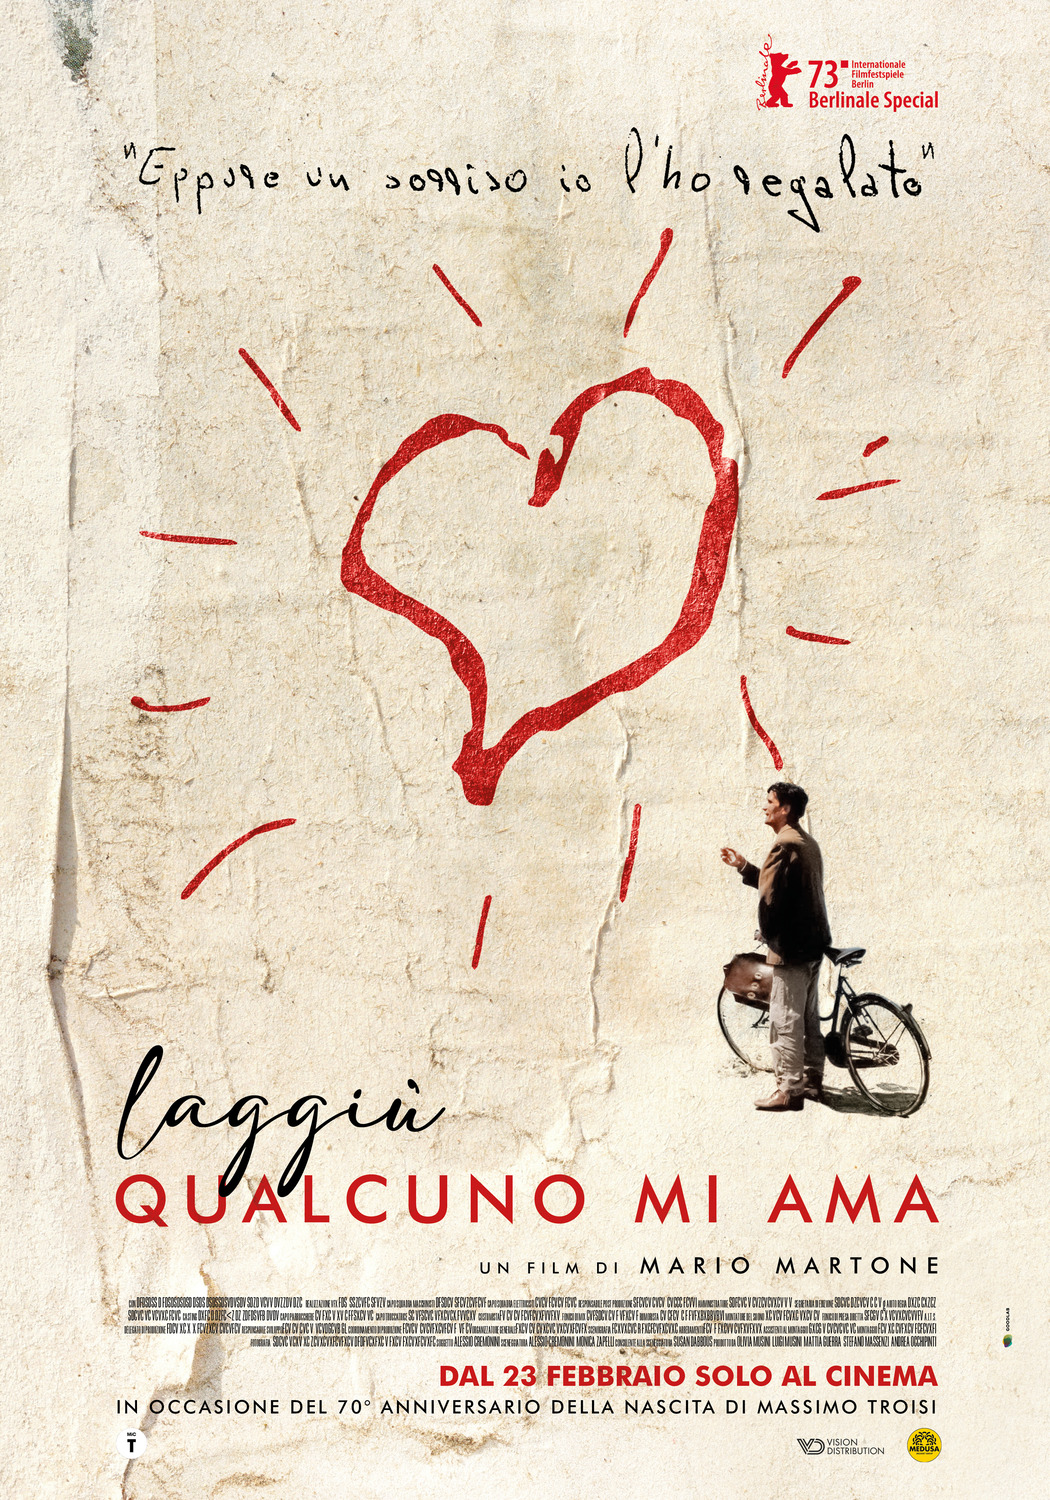 Extra Large Movie Poster Image for Laggiù qualcuno mi ama (#3 of 3)